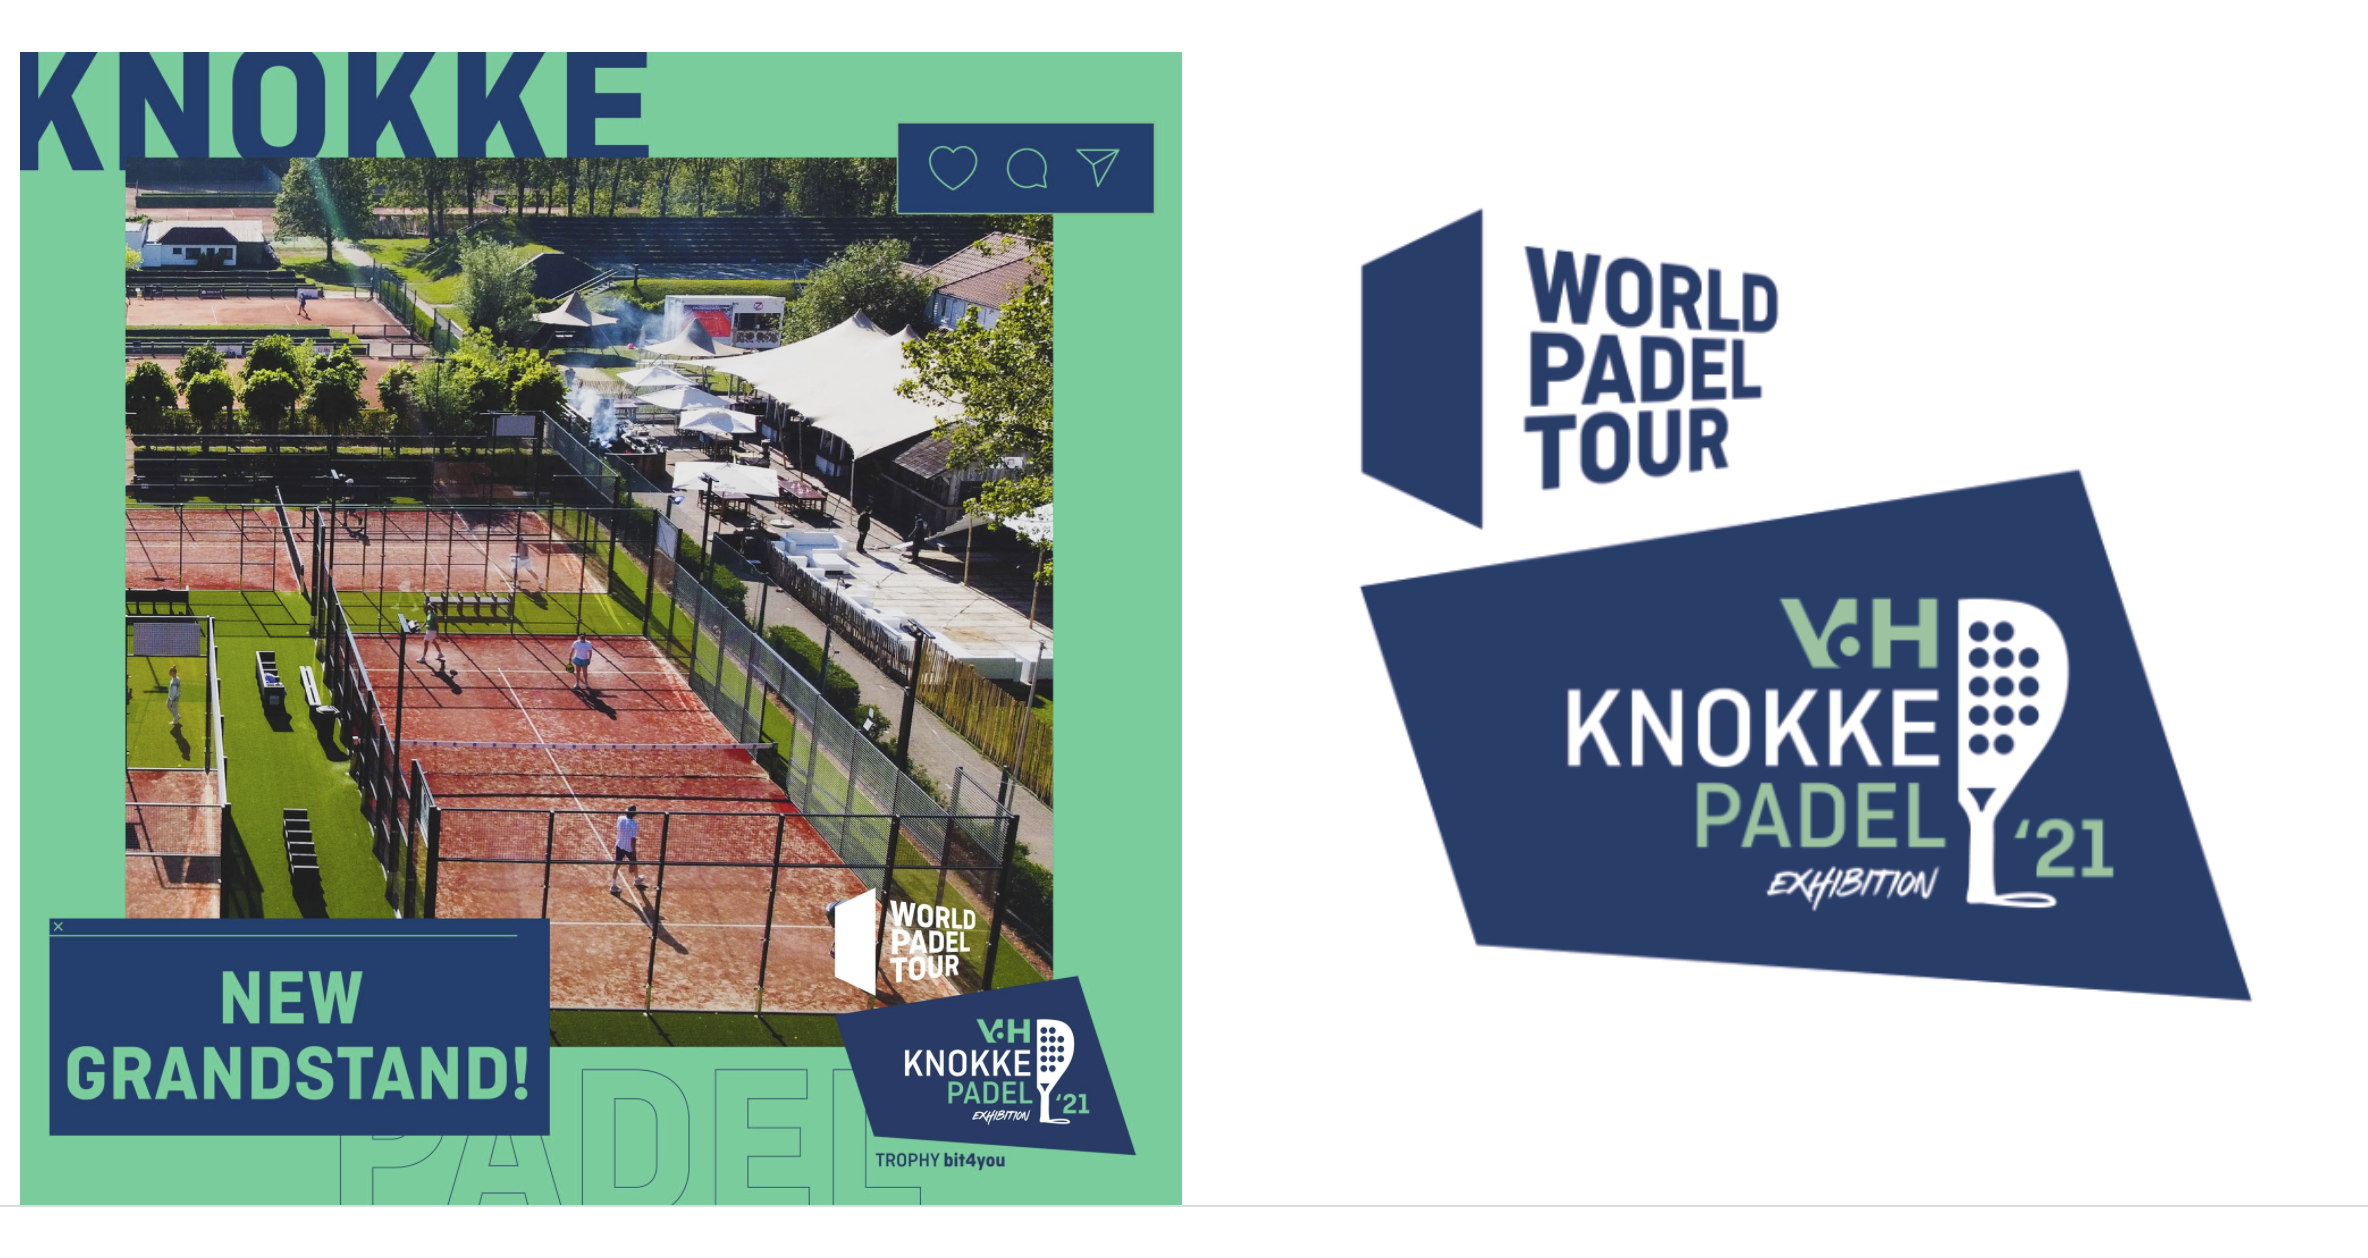 World Padel Tour Knokke 2021: ¡está sucediendo!